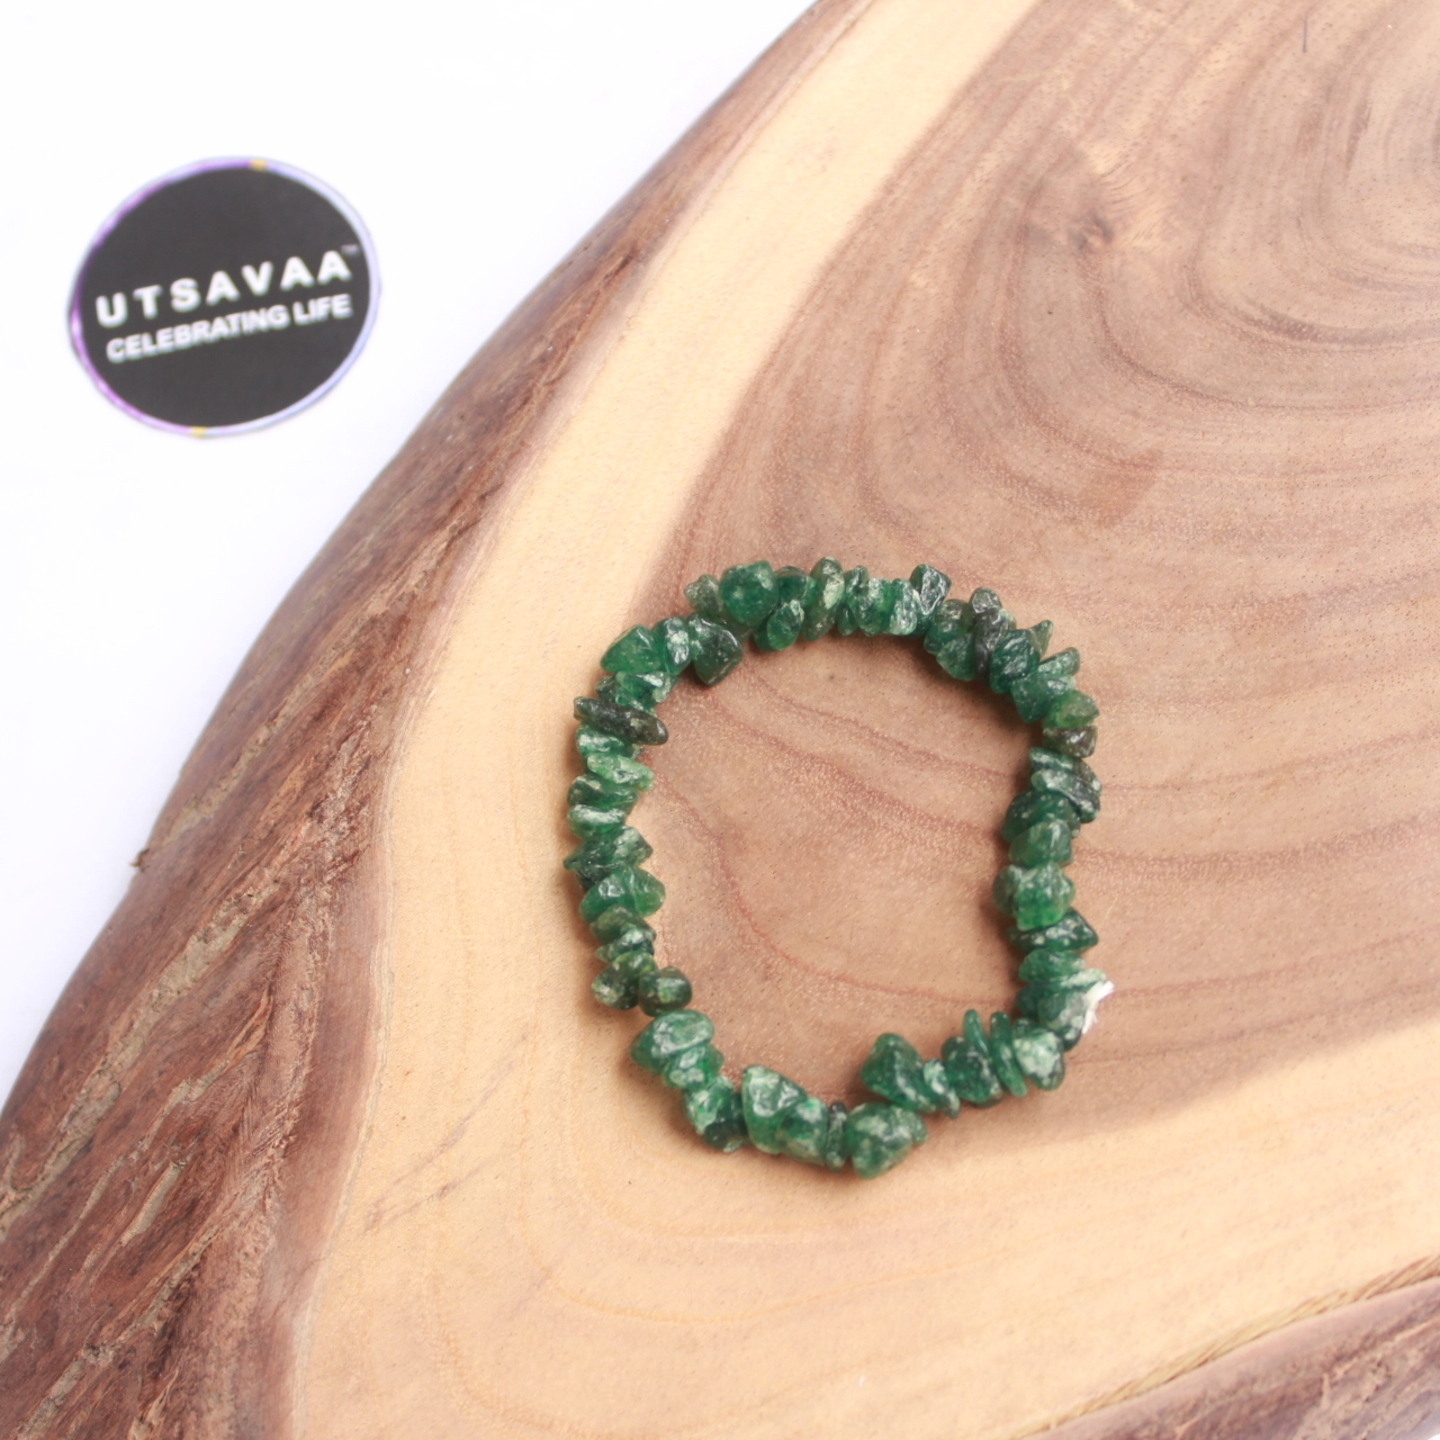 Green jade heart chakra crystal chip bracelet Utsavaa